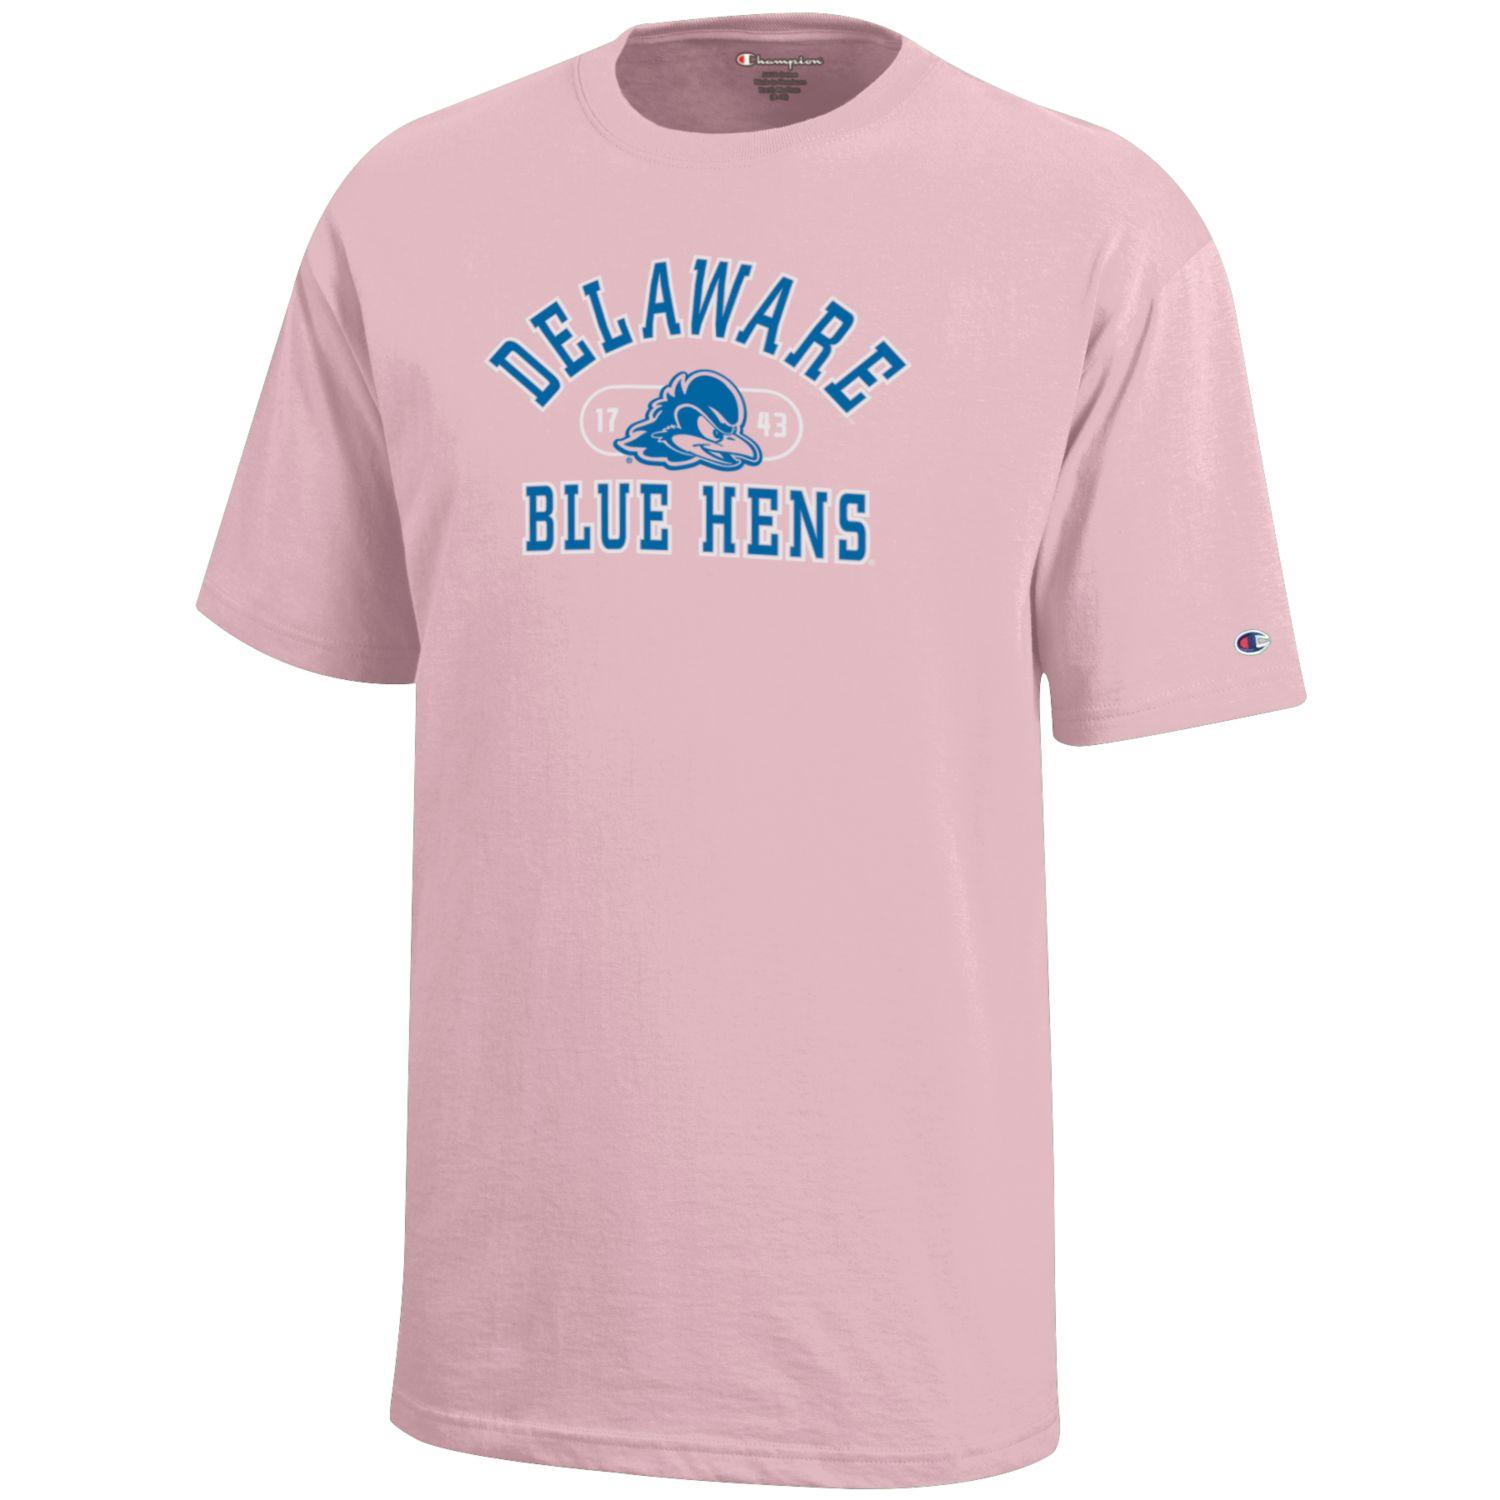 1743 Youth T-Shirt RYLDEL12 Venley Official NCAA University of Delaware Blue Hens Est 